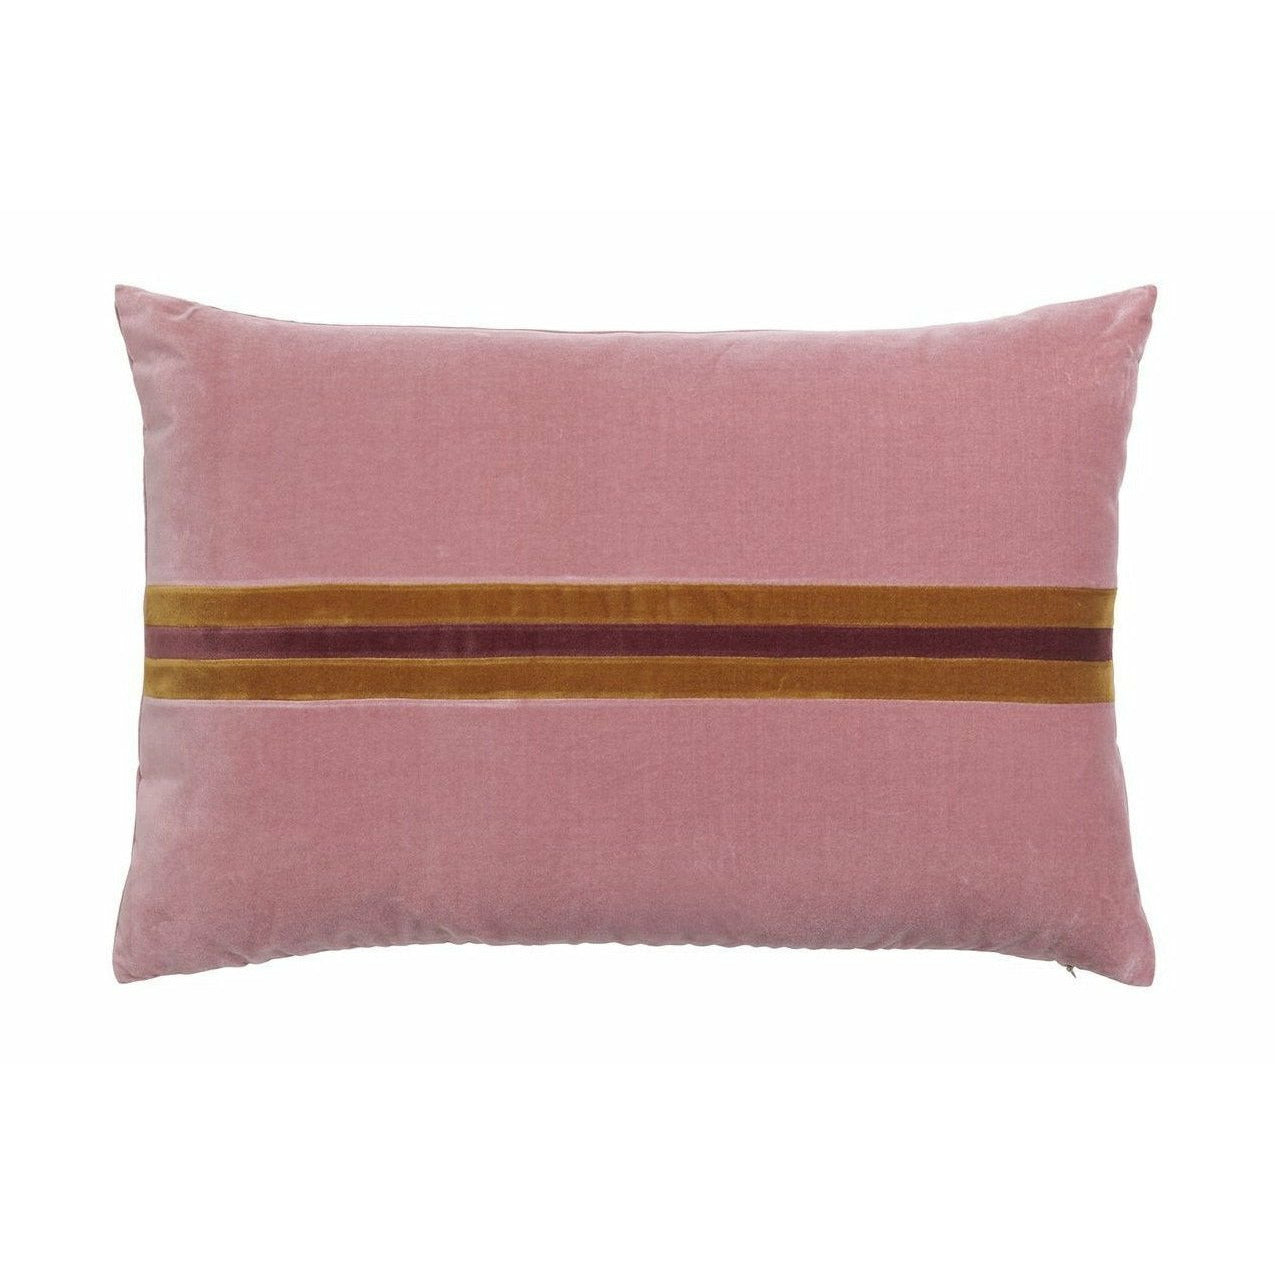 Christina Lundsteen Harlow Velor Cushion, Old Rose/Caramel/Prune